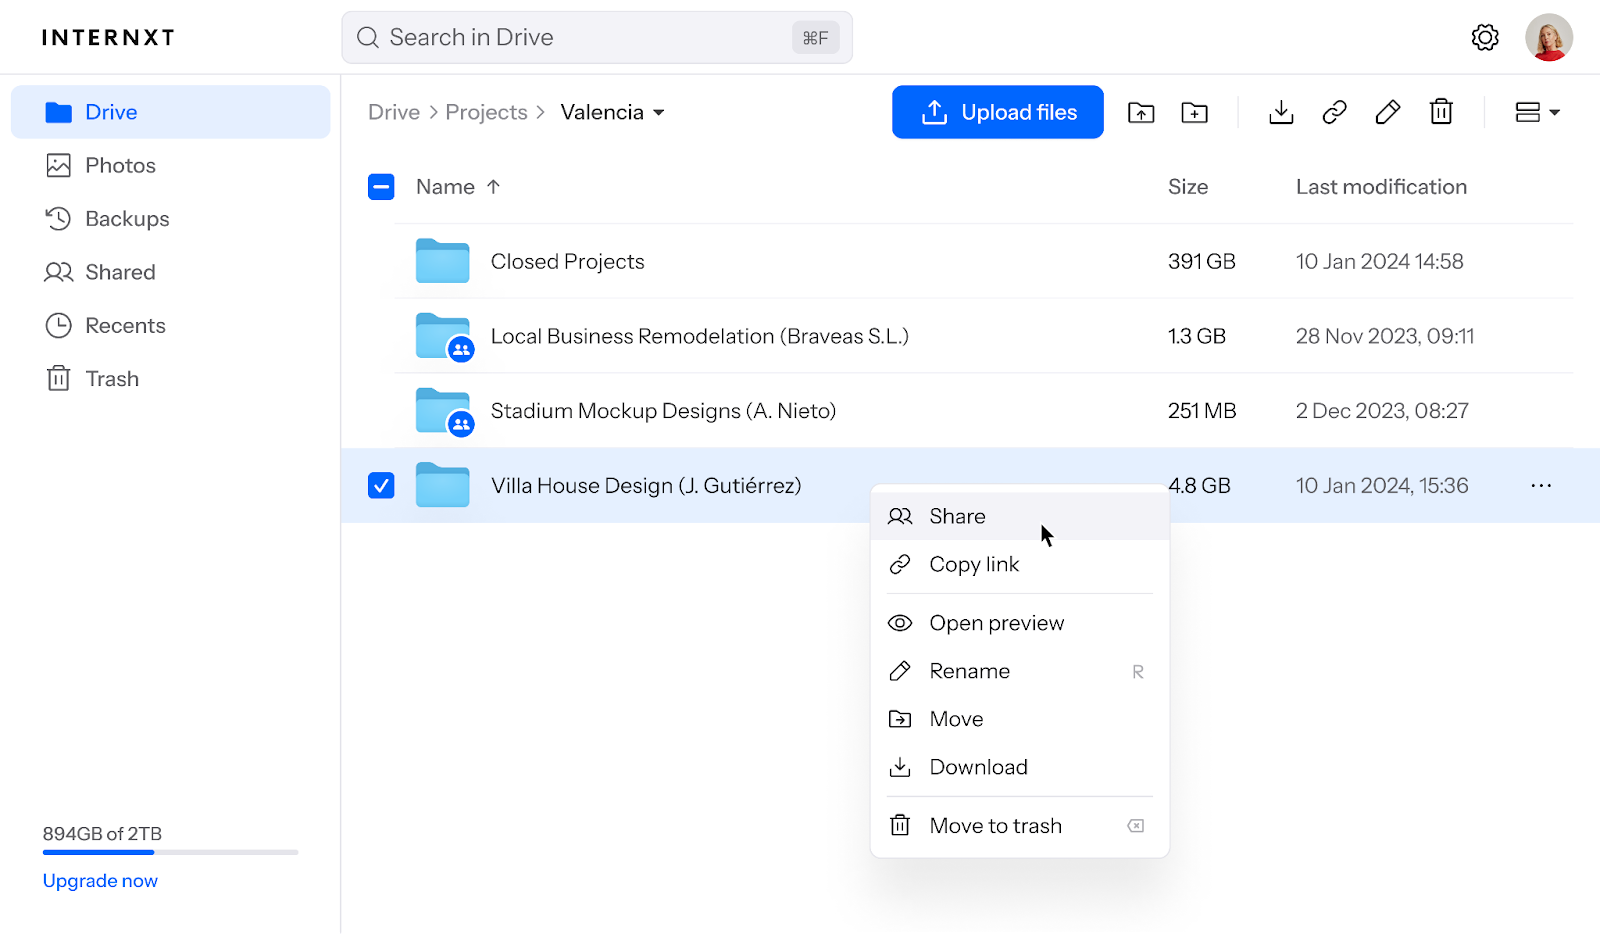 Internxt Drive interface showing advanced folder sharing.